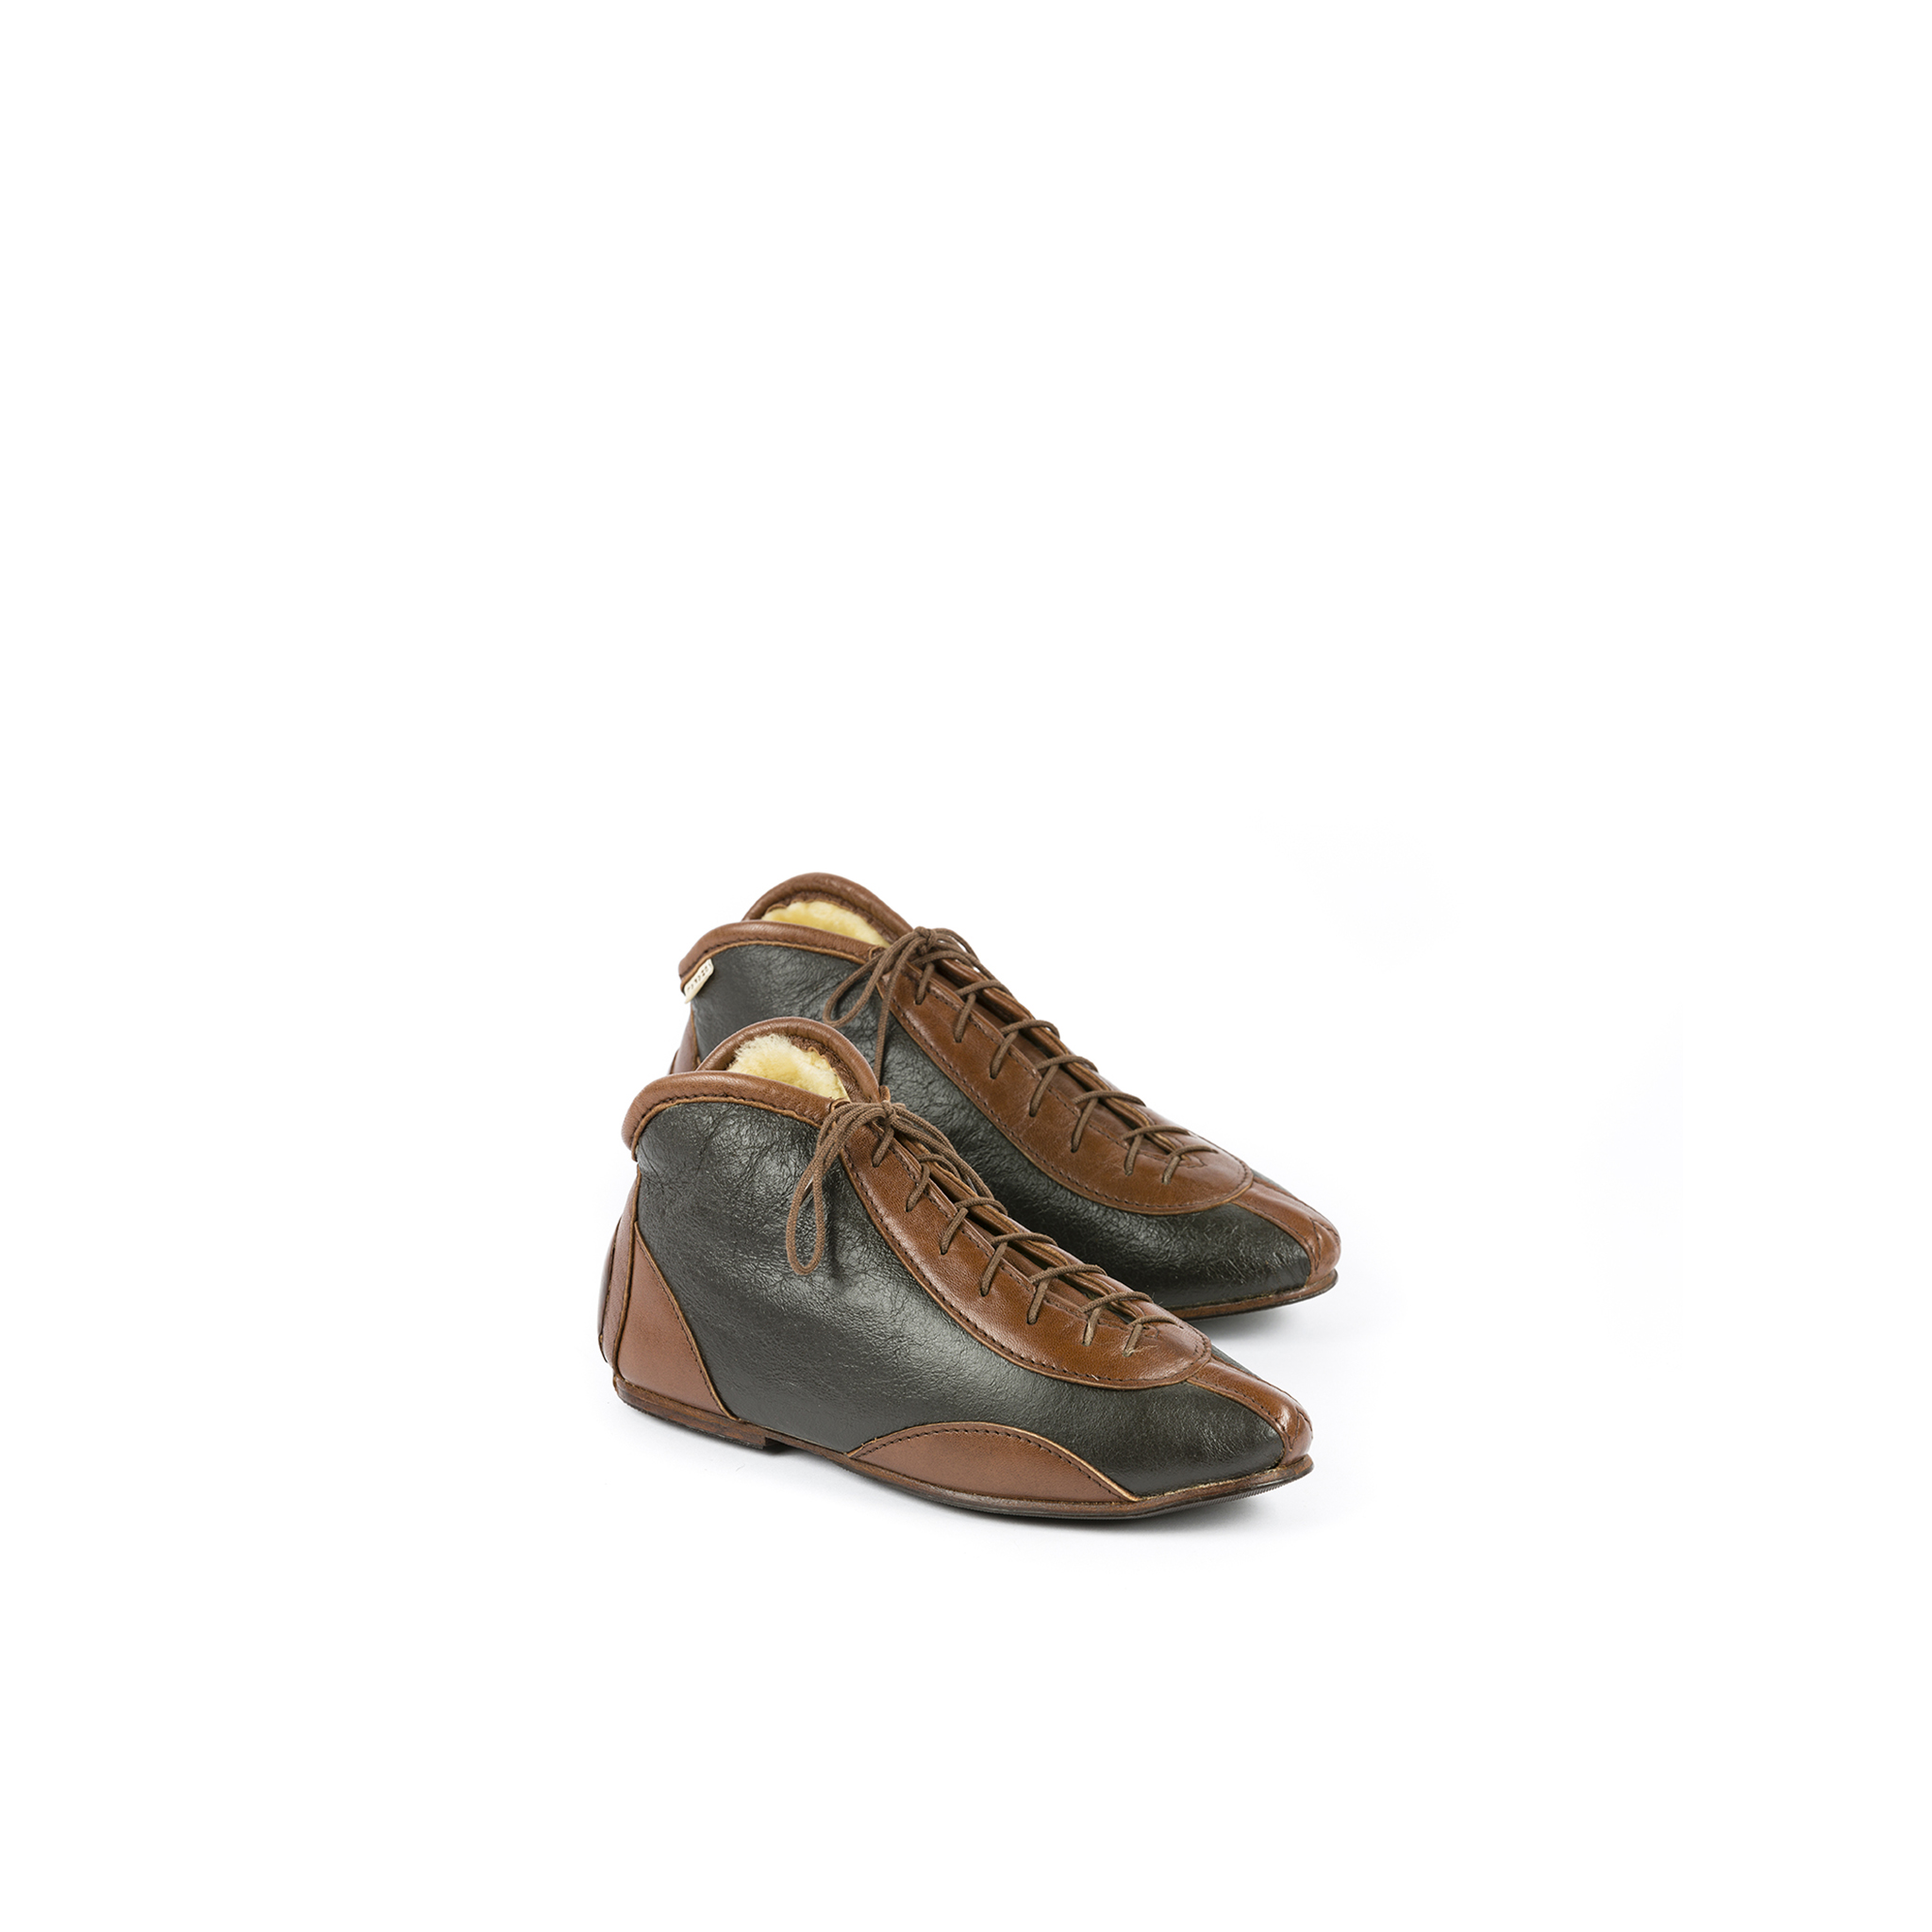 Pilot 60's Shoes - Shearling - Gold color